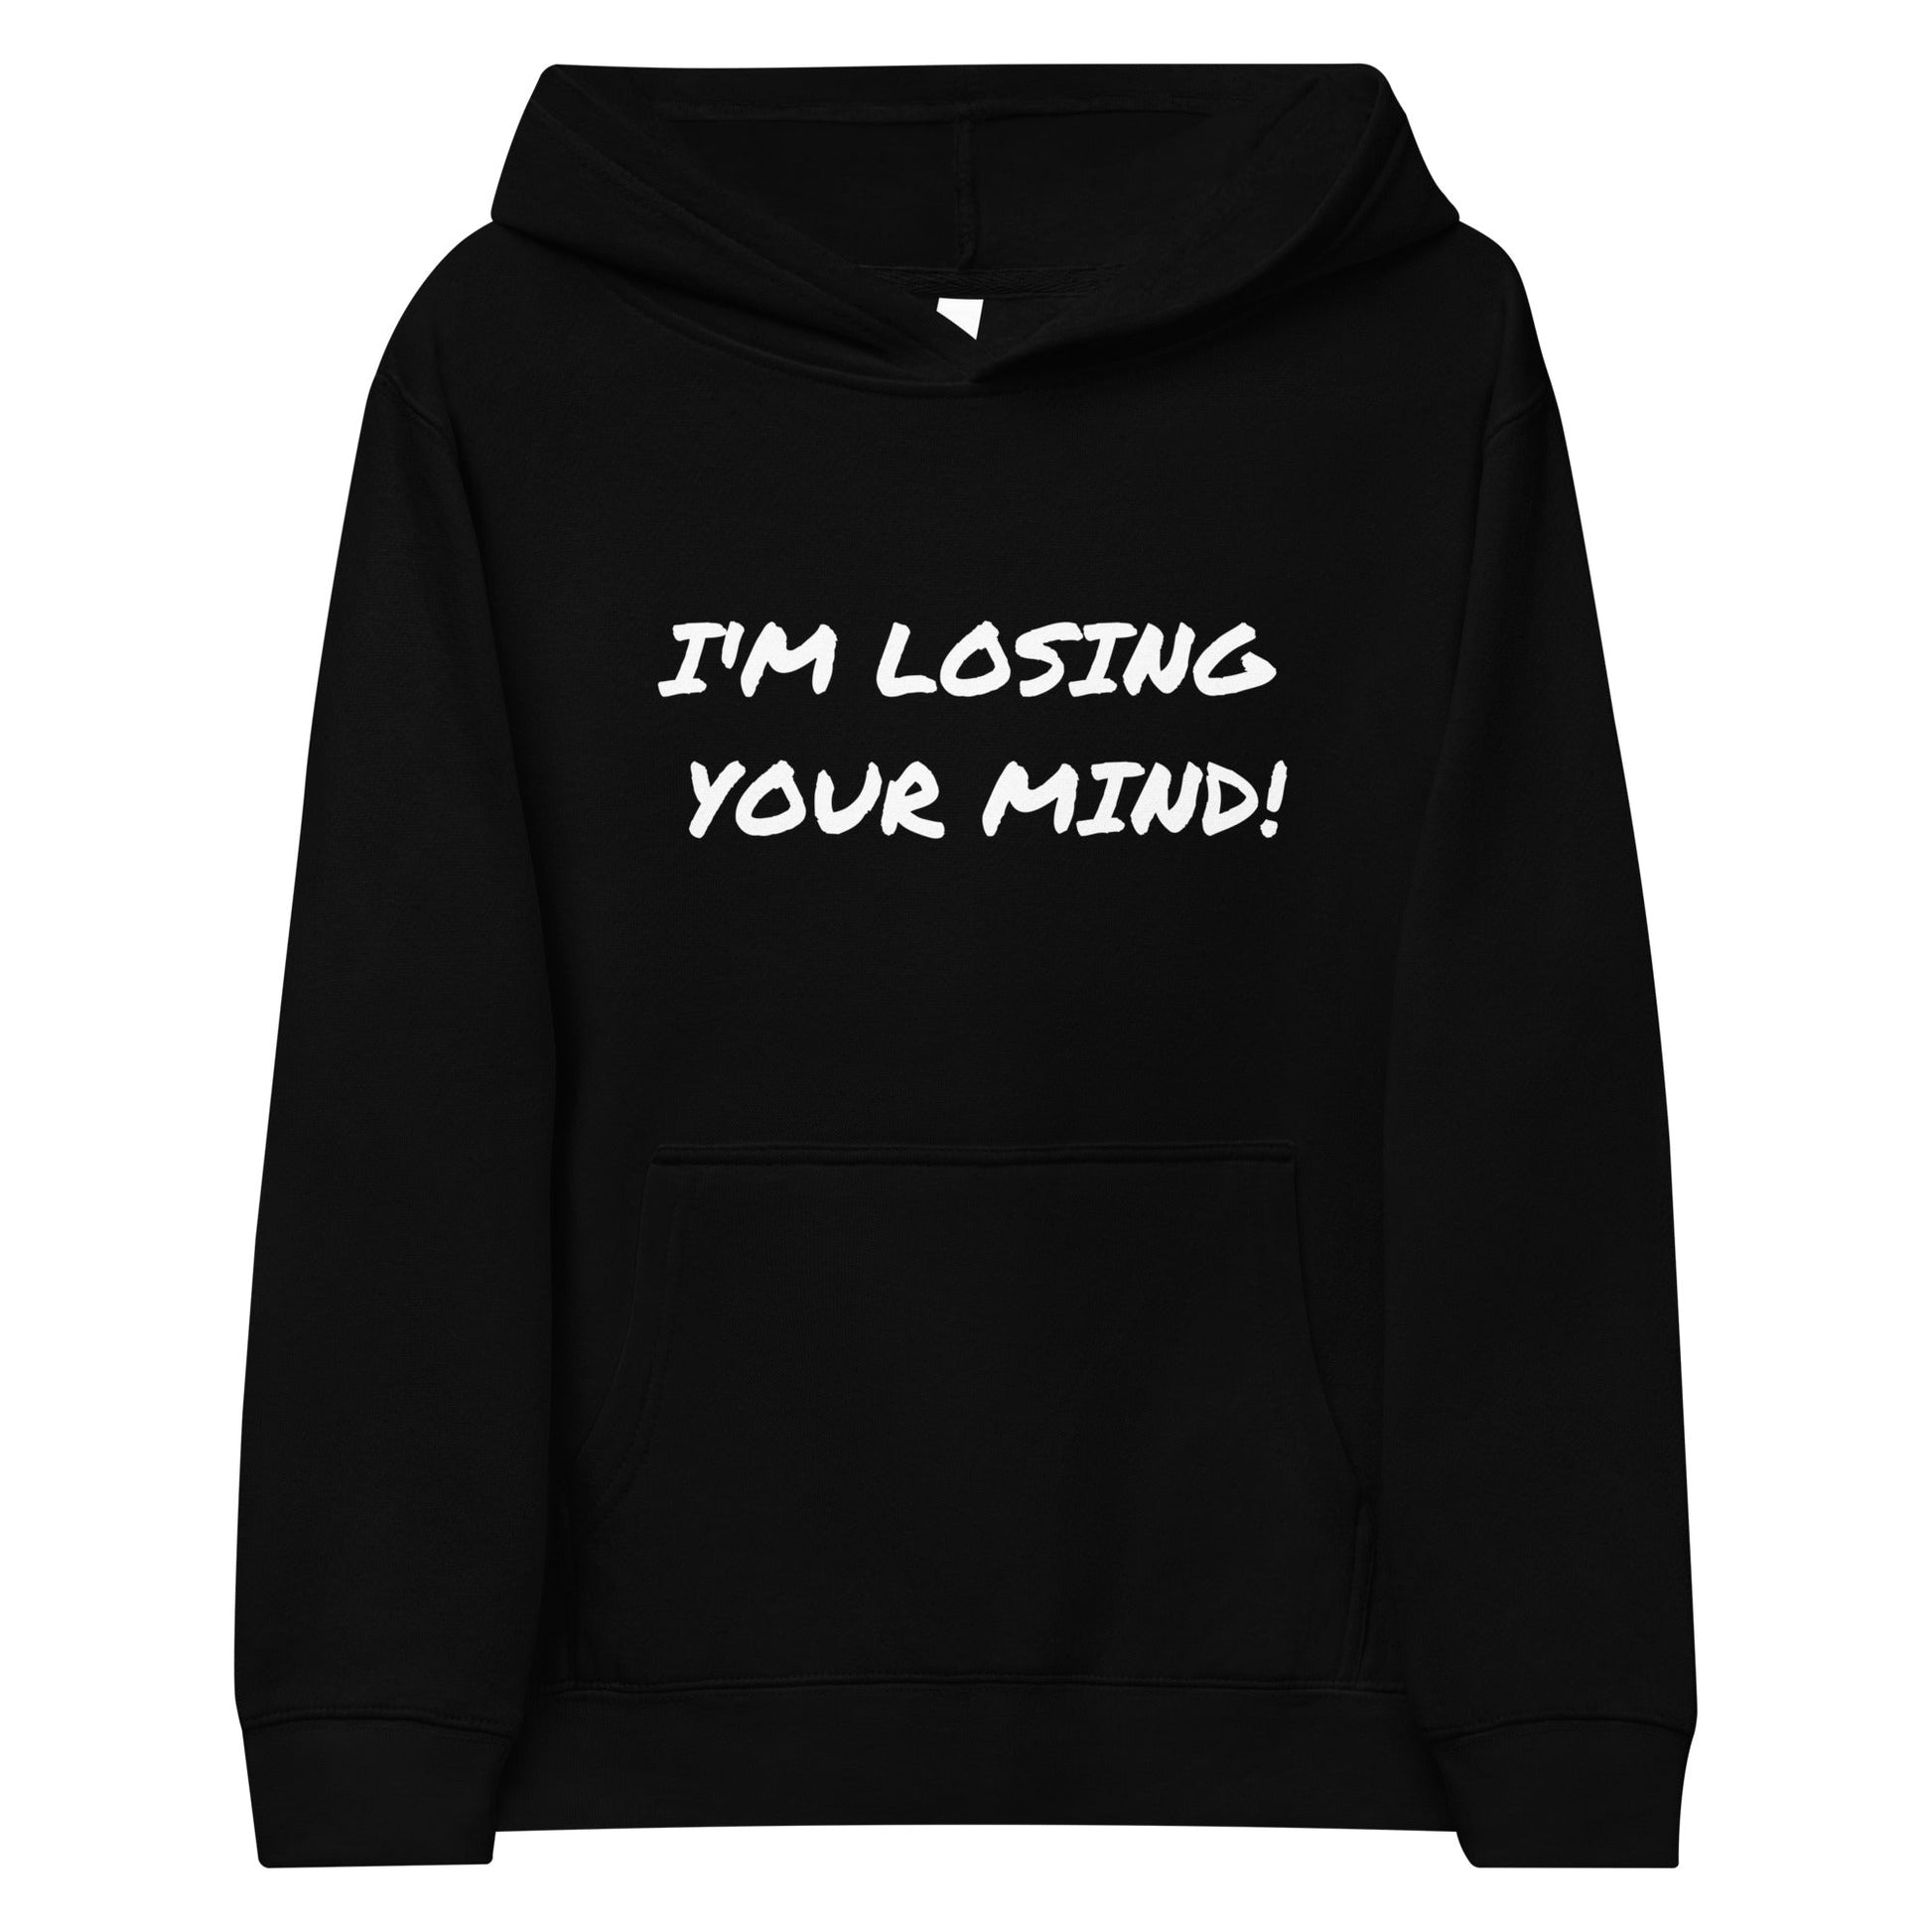 I’m Losing Your Mind | Kids fleece hoodie